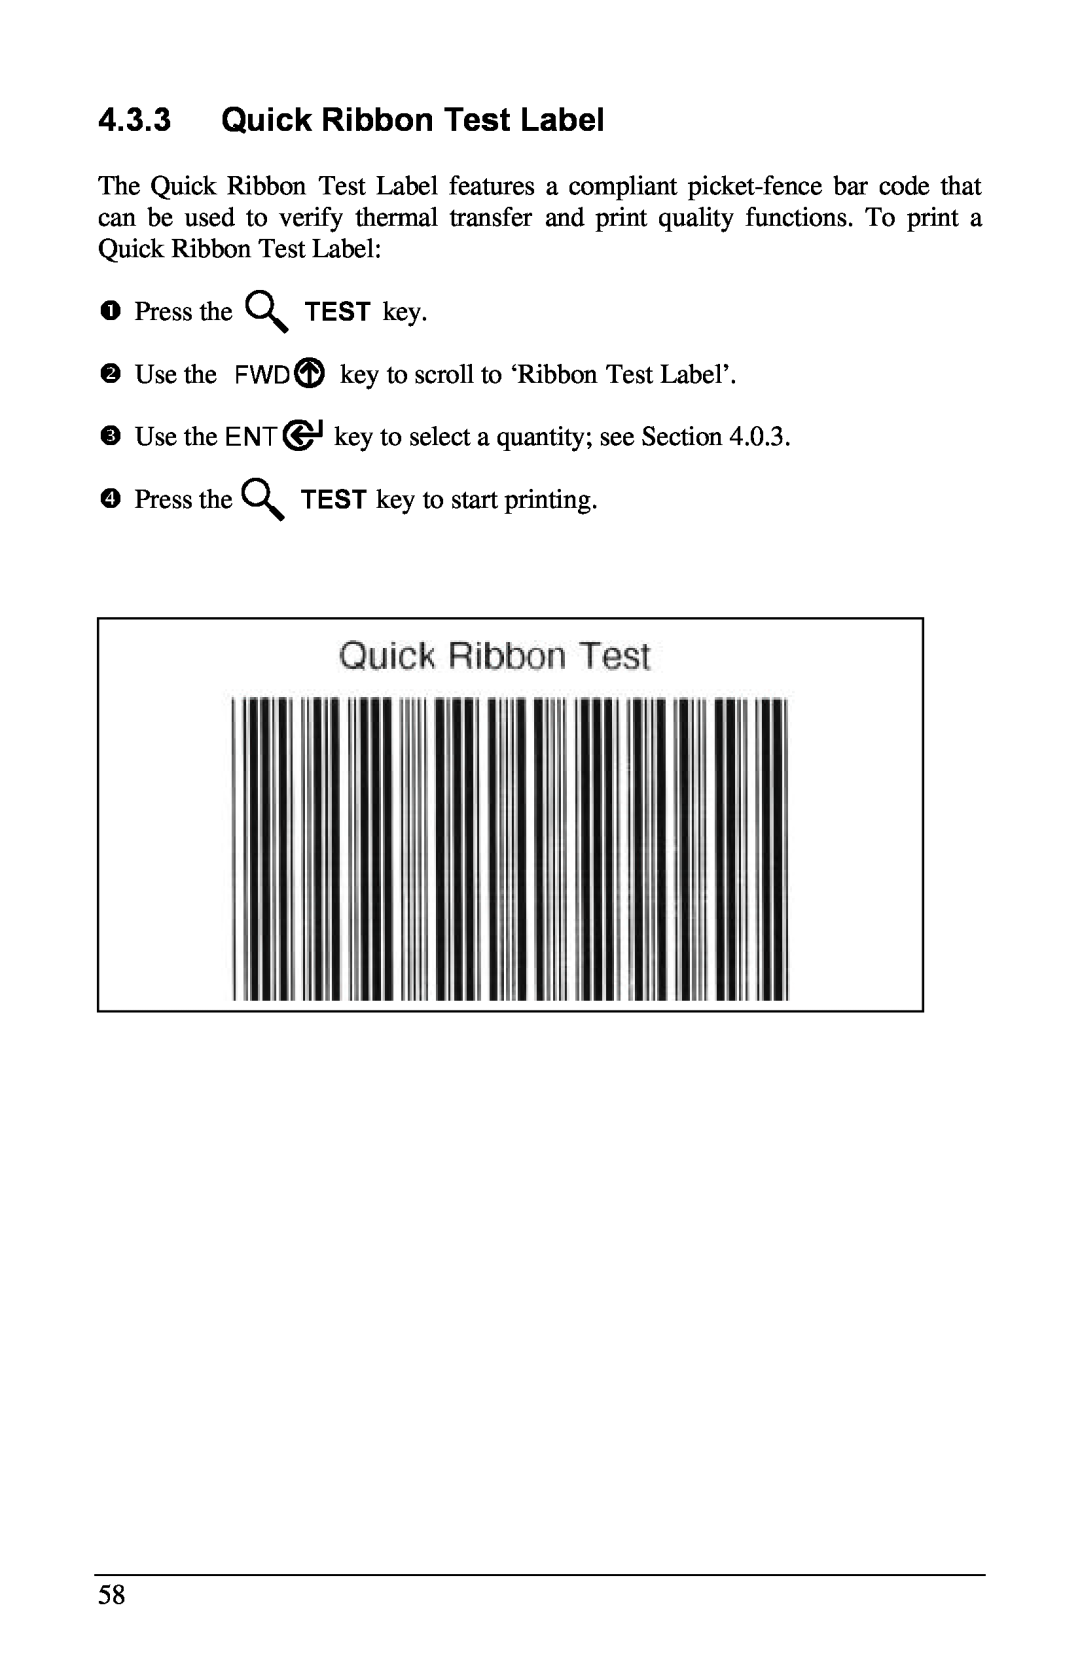 Brady 2461, 3481 Quick Ribbon Test Label, Œ Press the, Use the key to scroll to ‘Ribbon Test Label’, key to start printing 